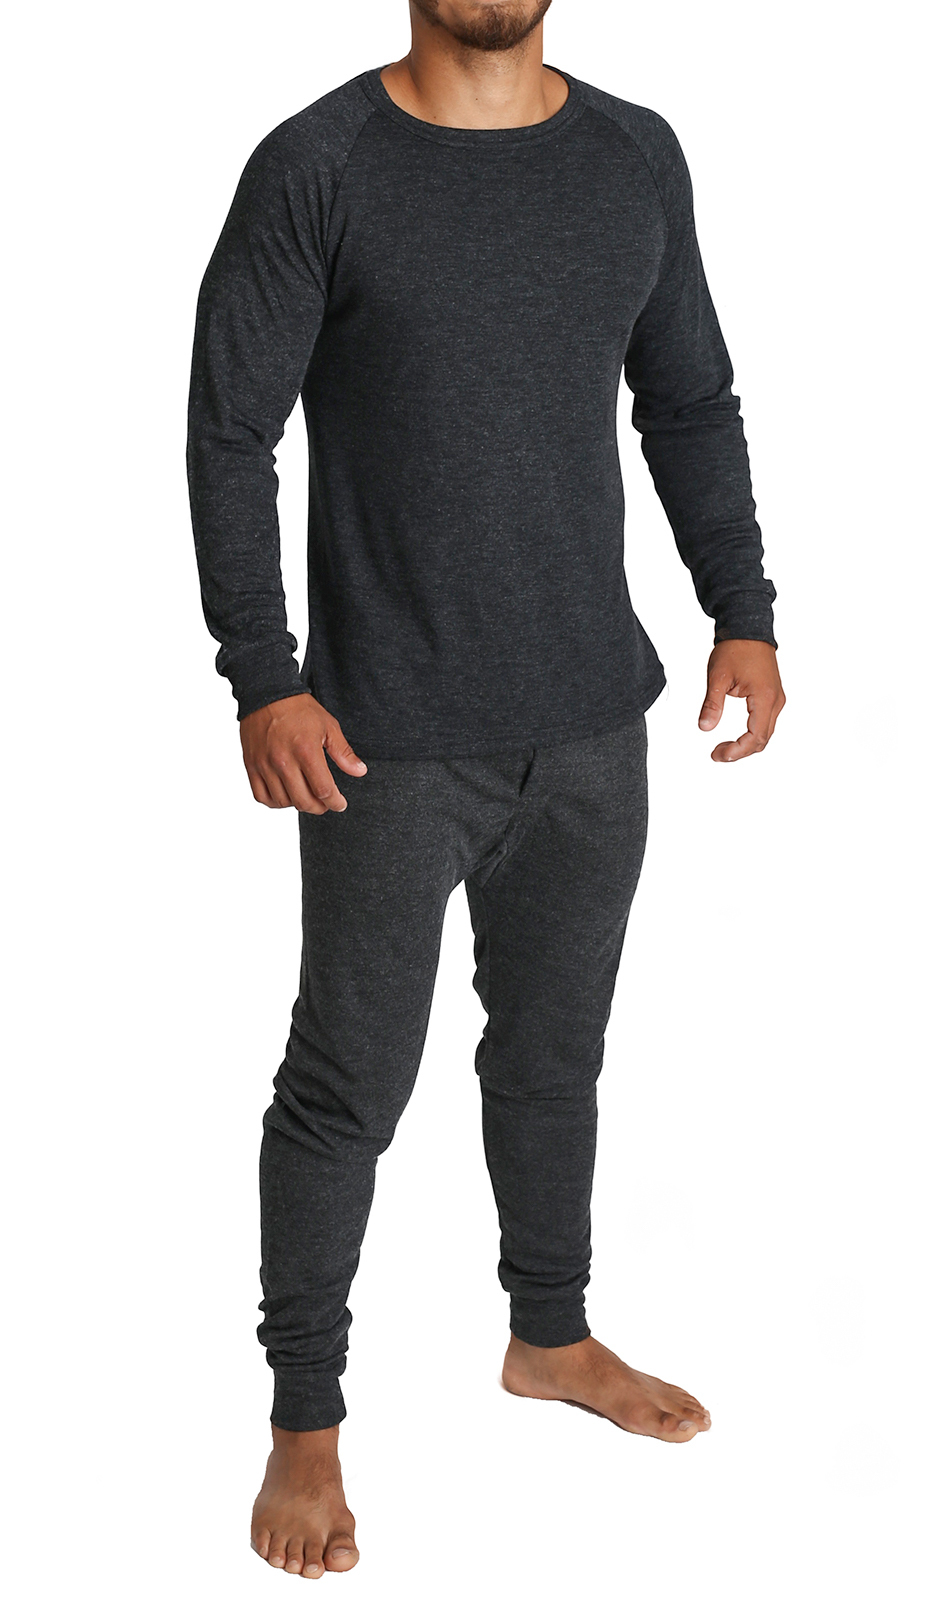 2pcs Set Men's Merino Wool Long Sleeve Thermal Top & Long Johns Pants Underwear eBay